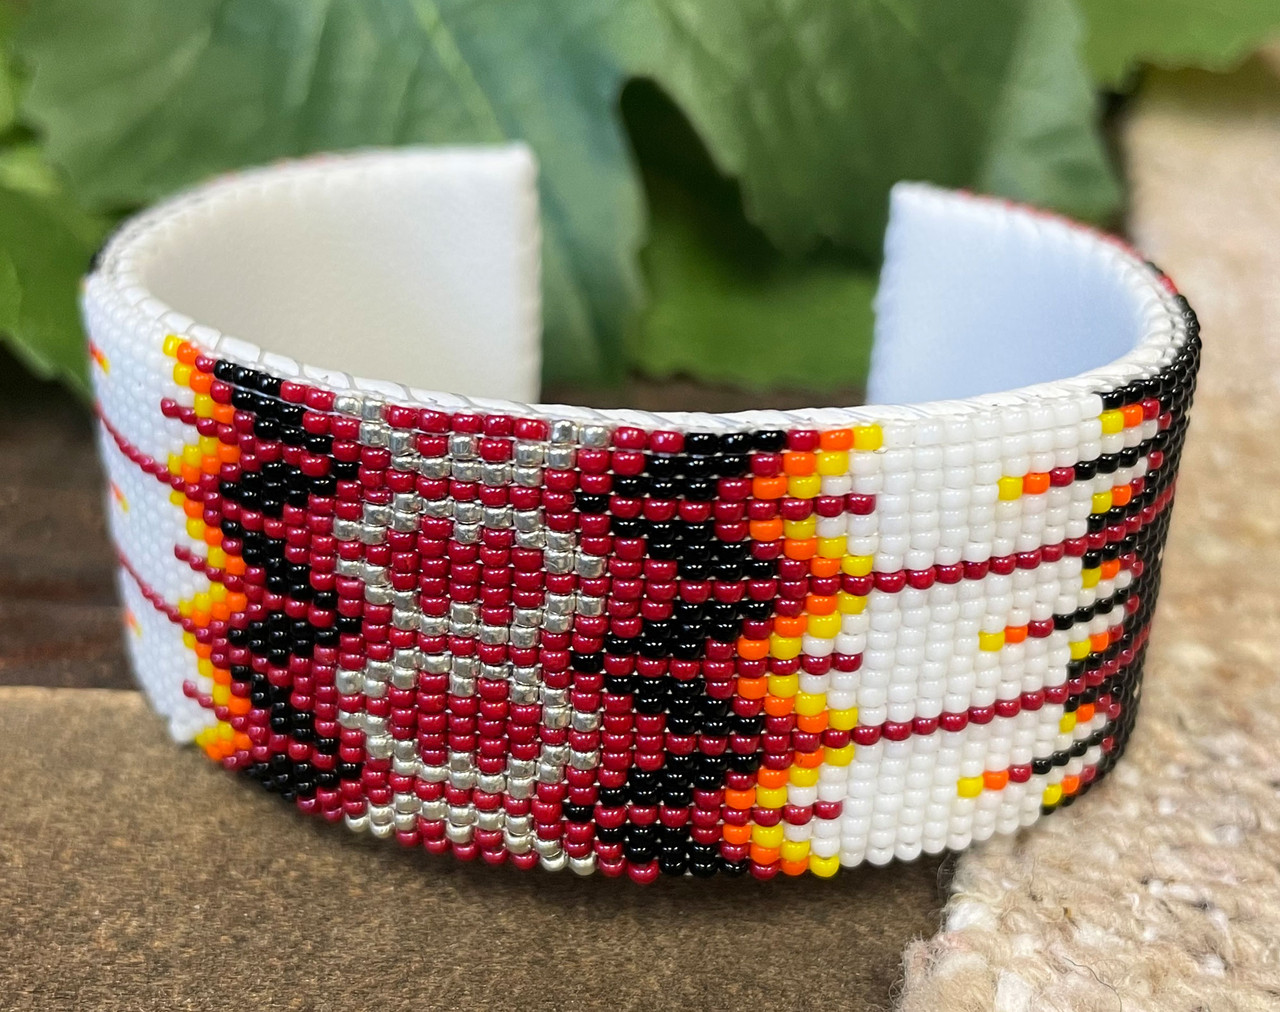 Colorful Mexican Bead Loom Bracelet, Loom Bead Bracelet, Native